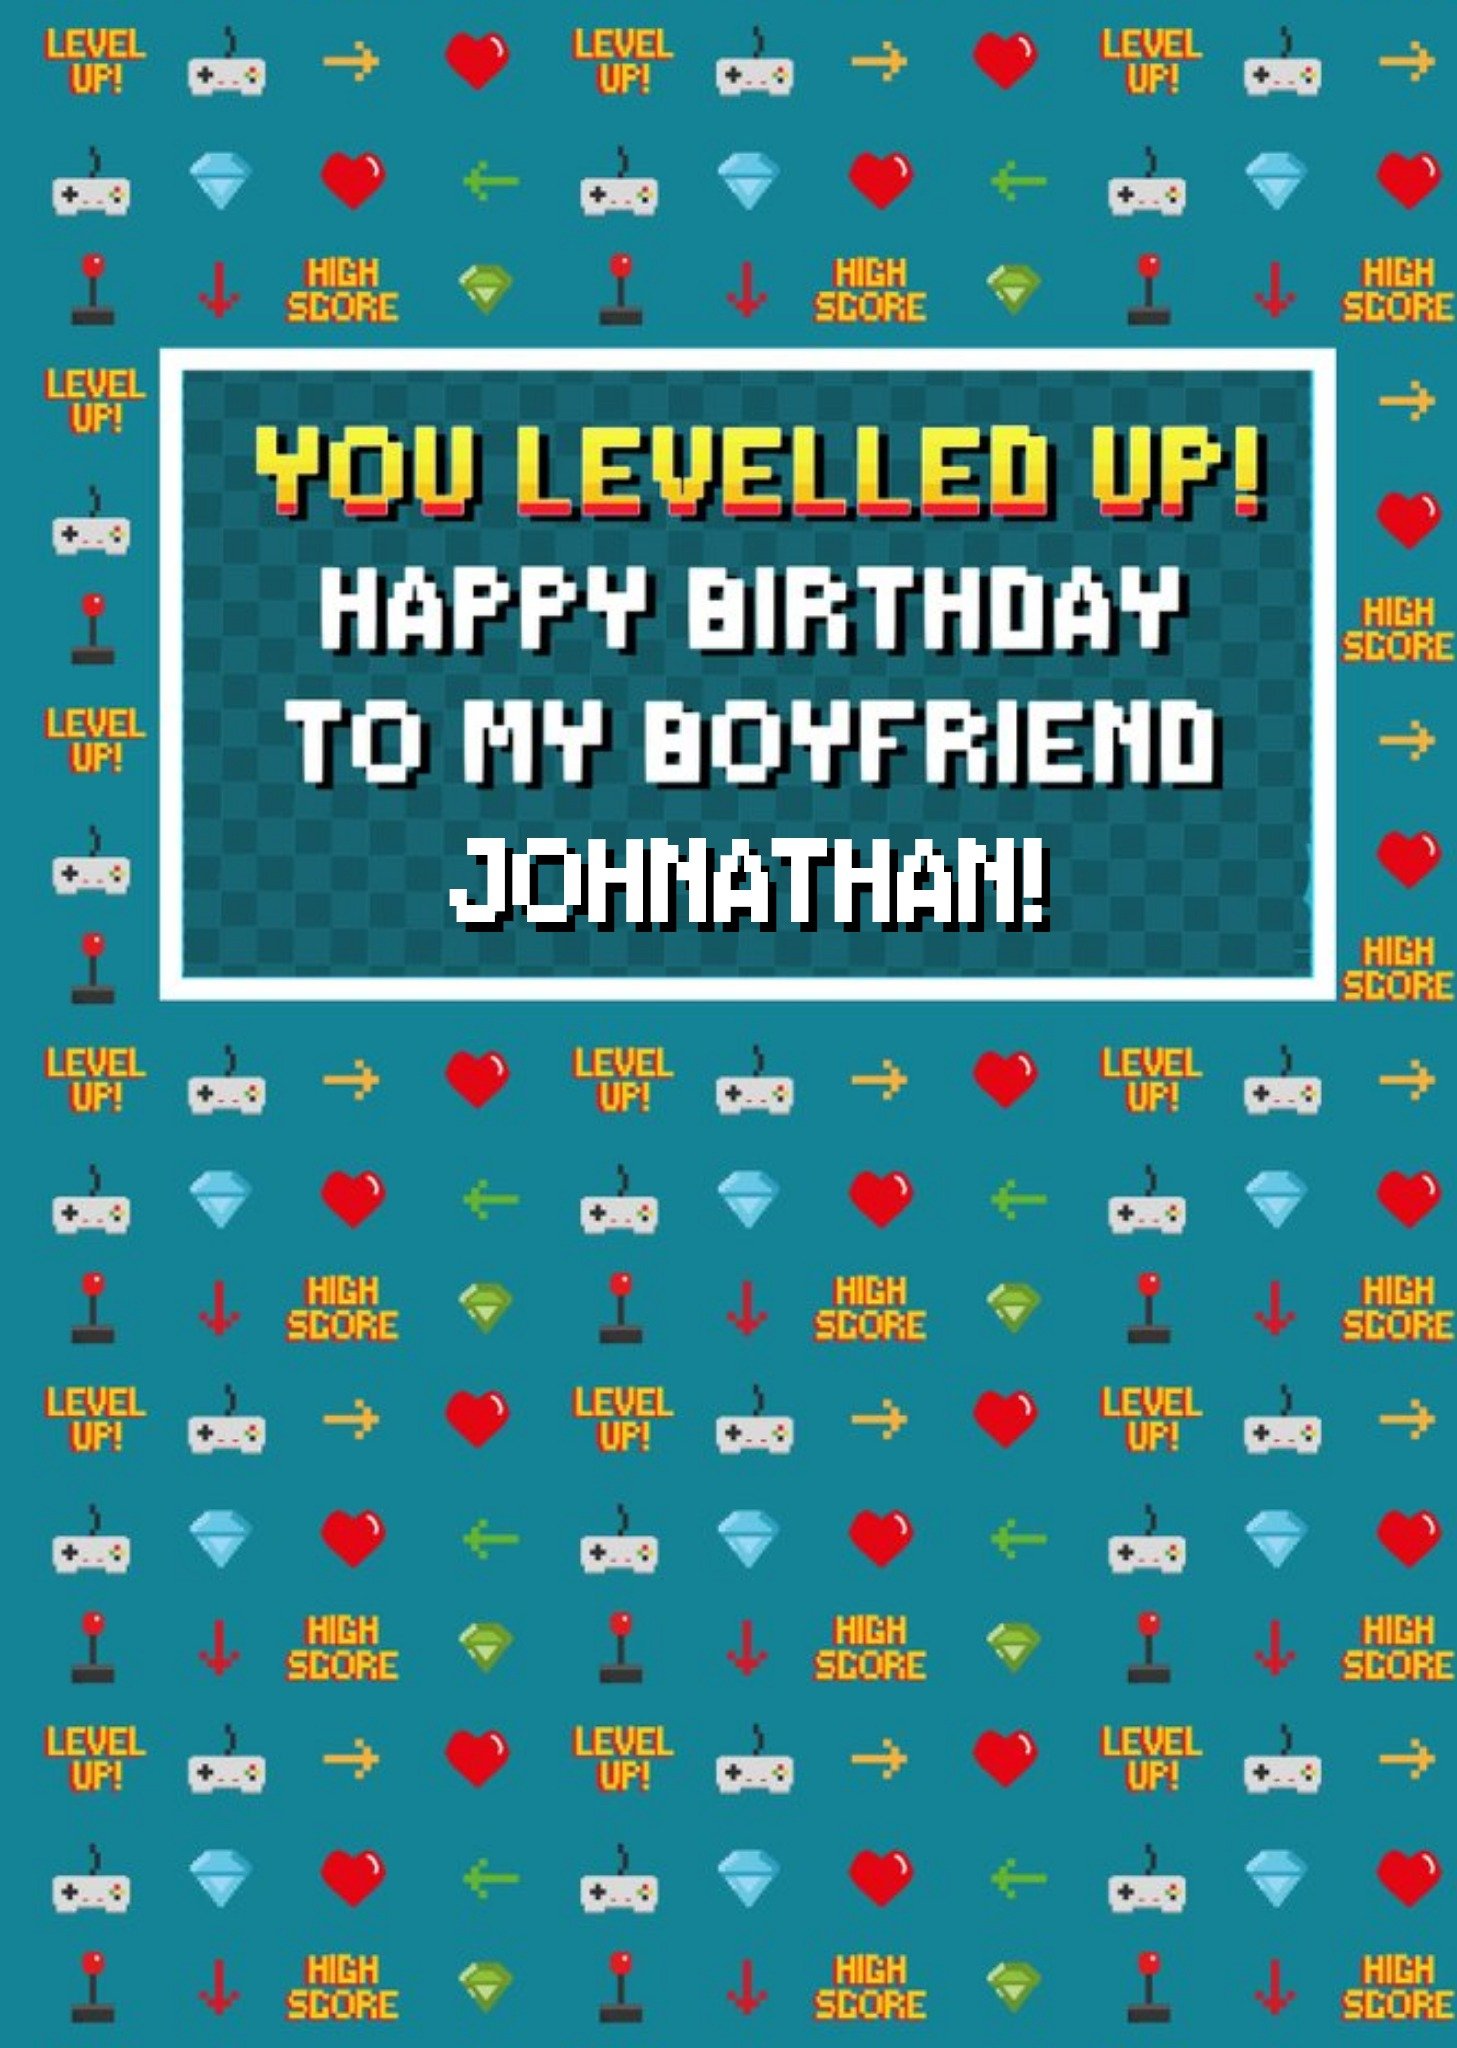 Moonpig Pixel Gaming Level Up Boyfriend Happy Birthday Card Ecard